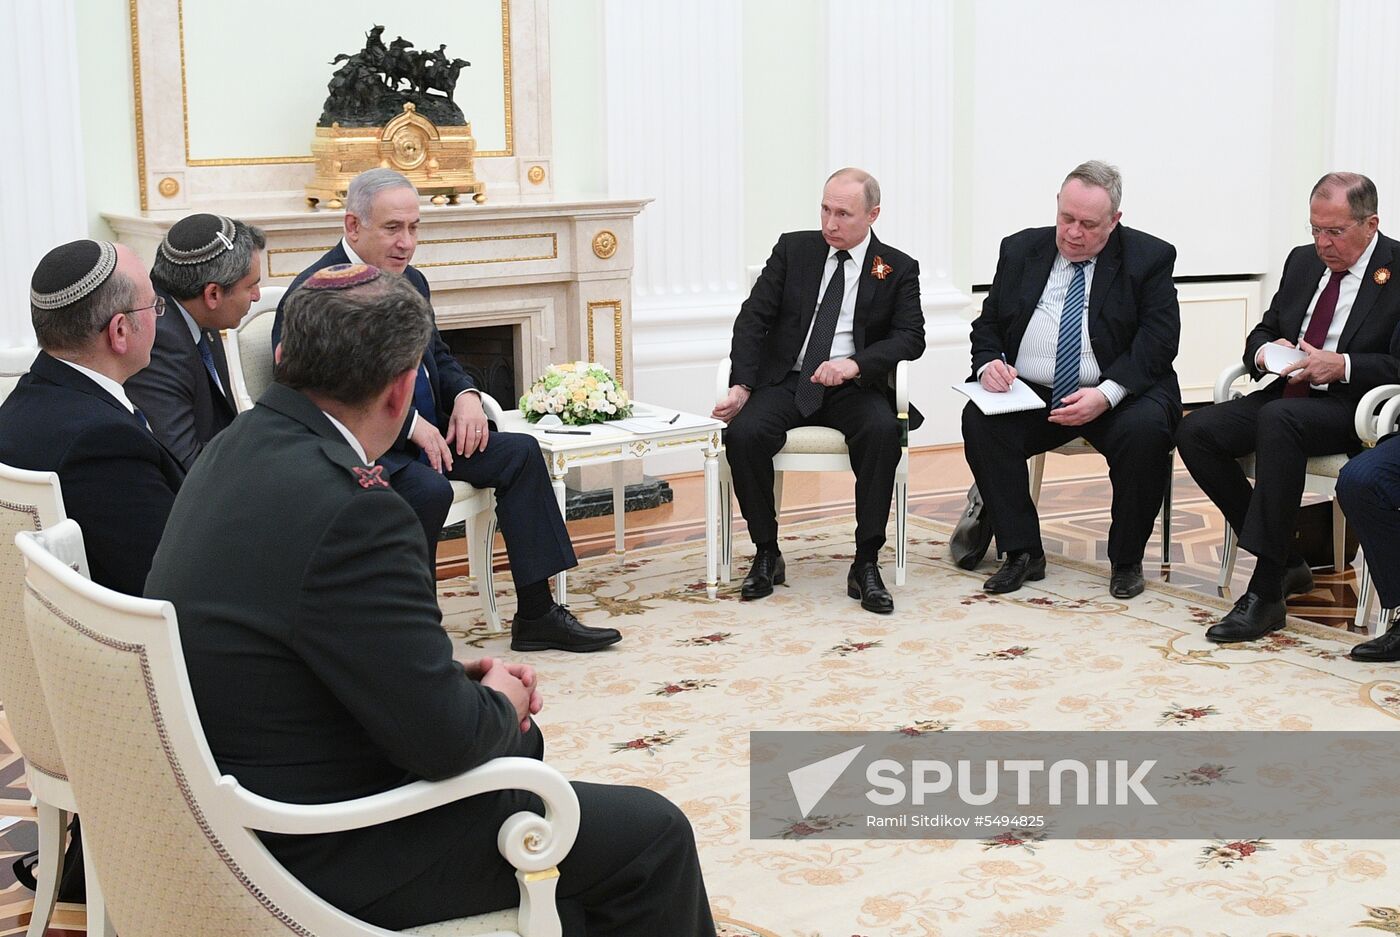 Vladimir Putin meets with Israeli Prime Minister Benjamin Netanyahu